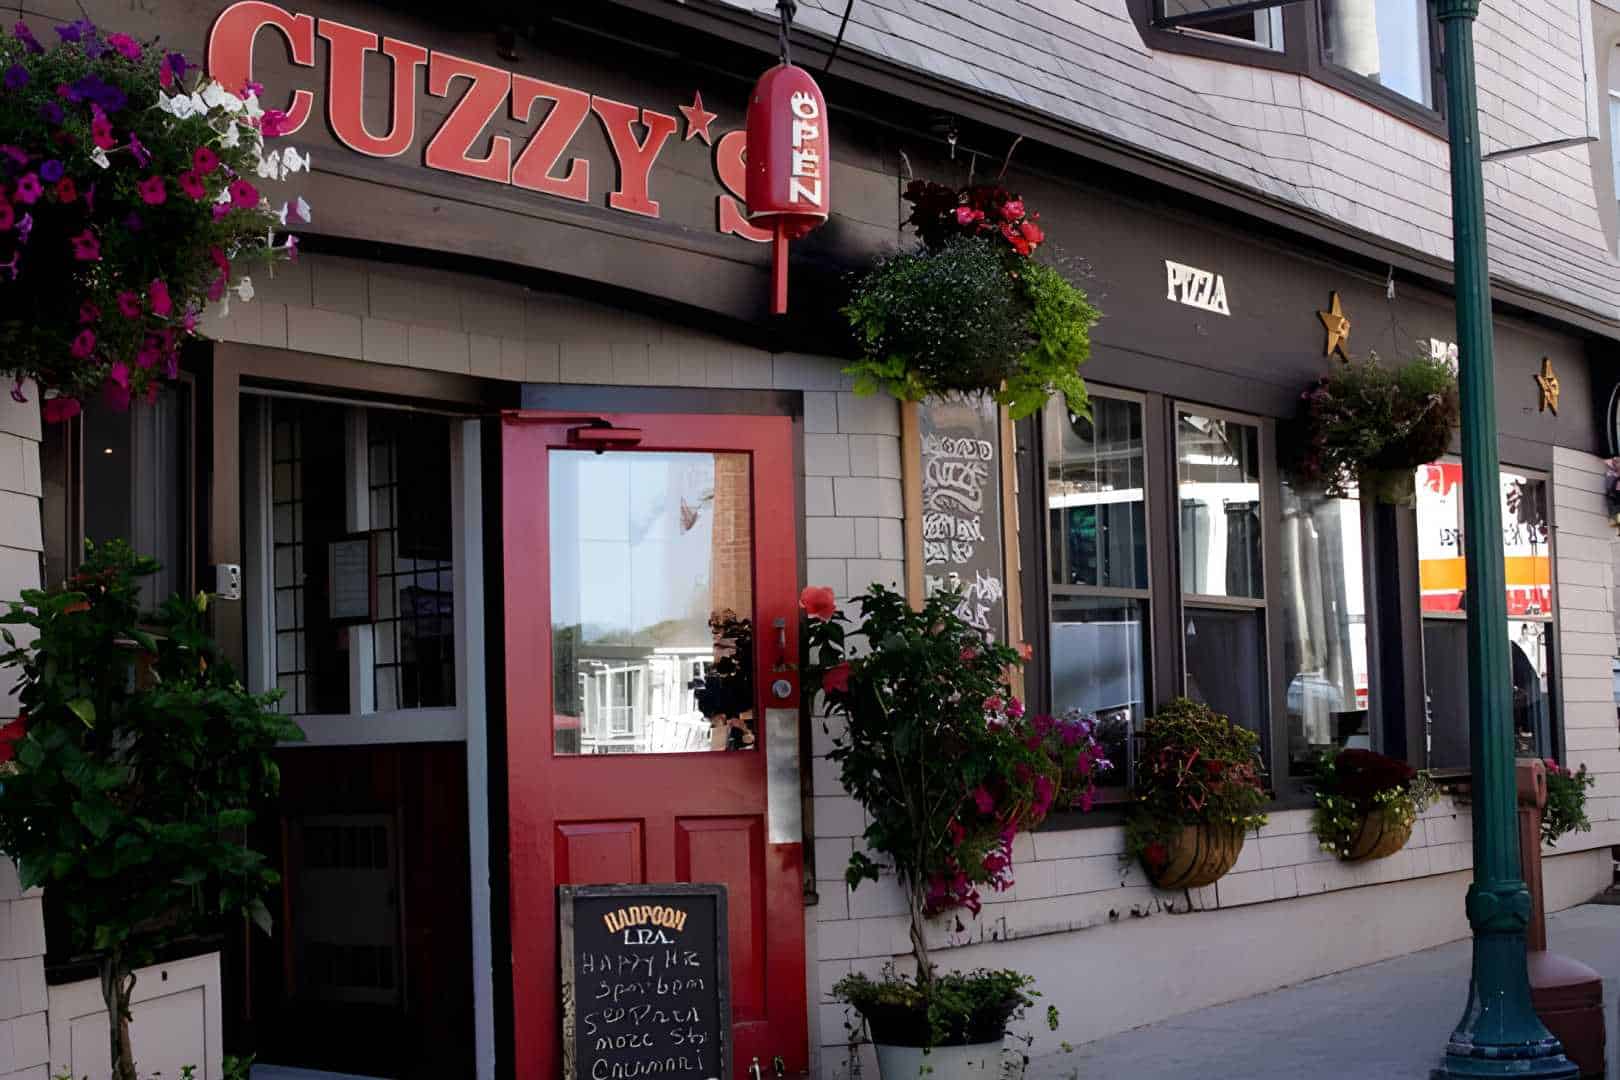 Cuzzy’s Restaurant Best Restaurants in Camden, ME